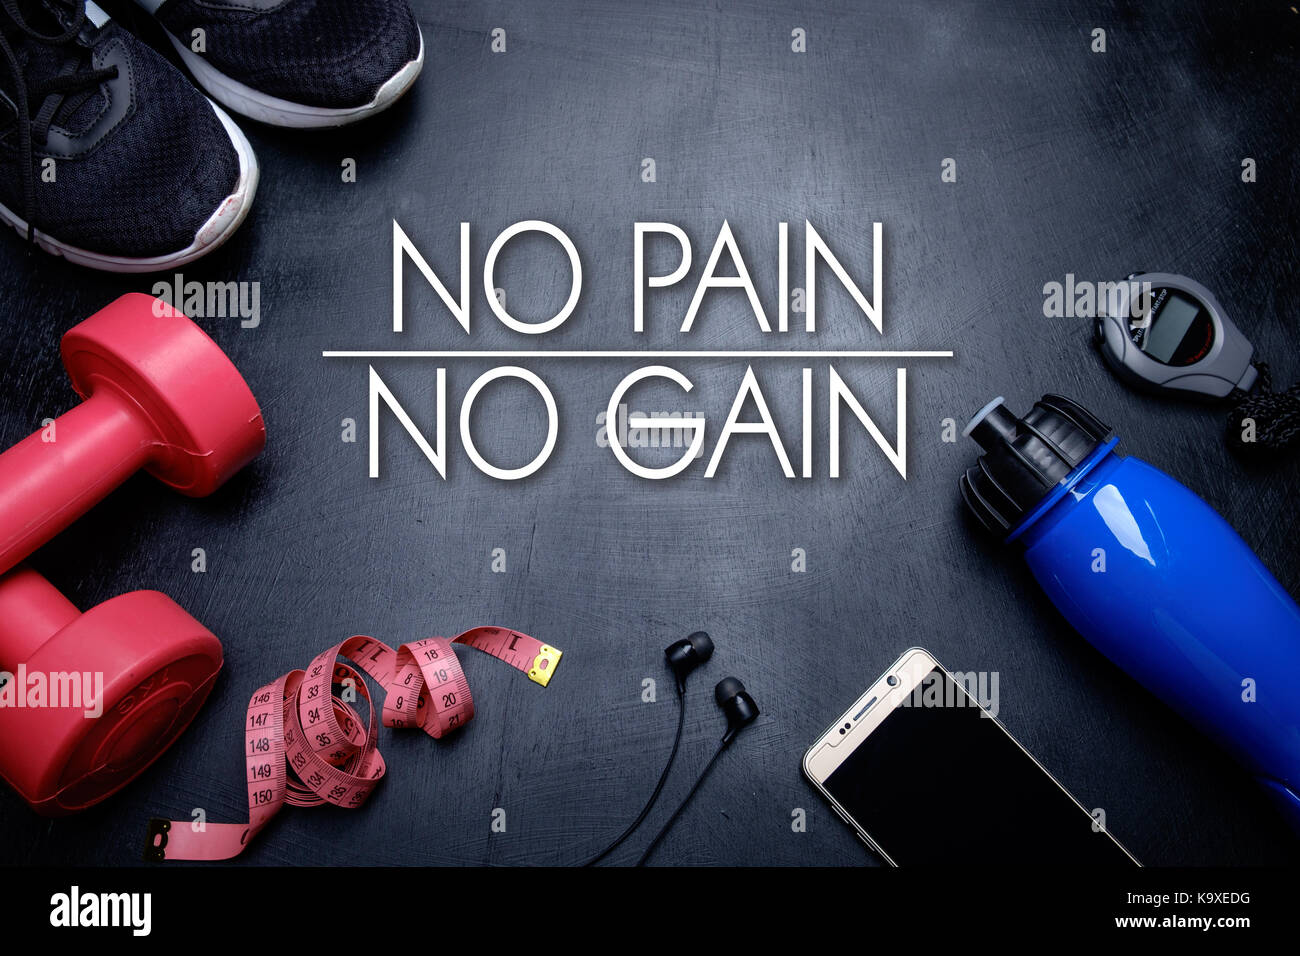 No pain, no gain. Health Fitness motivational quotes. Stock Photo